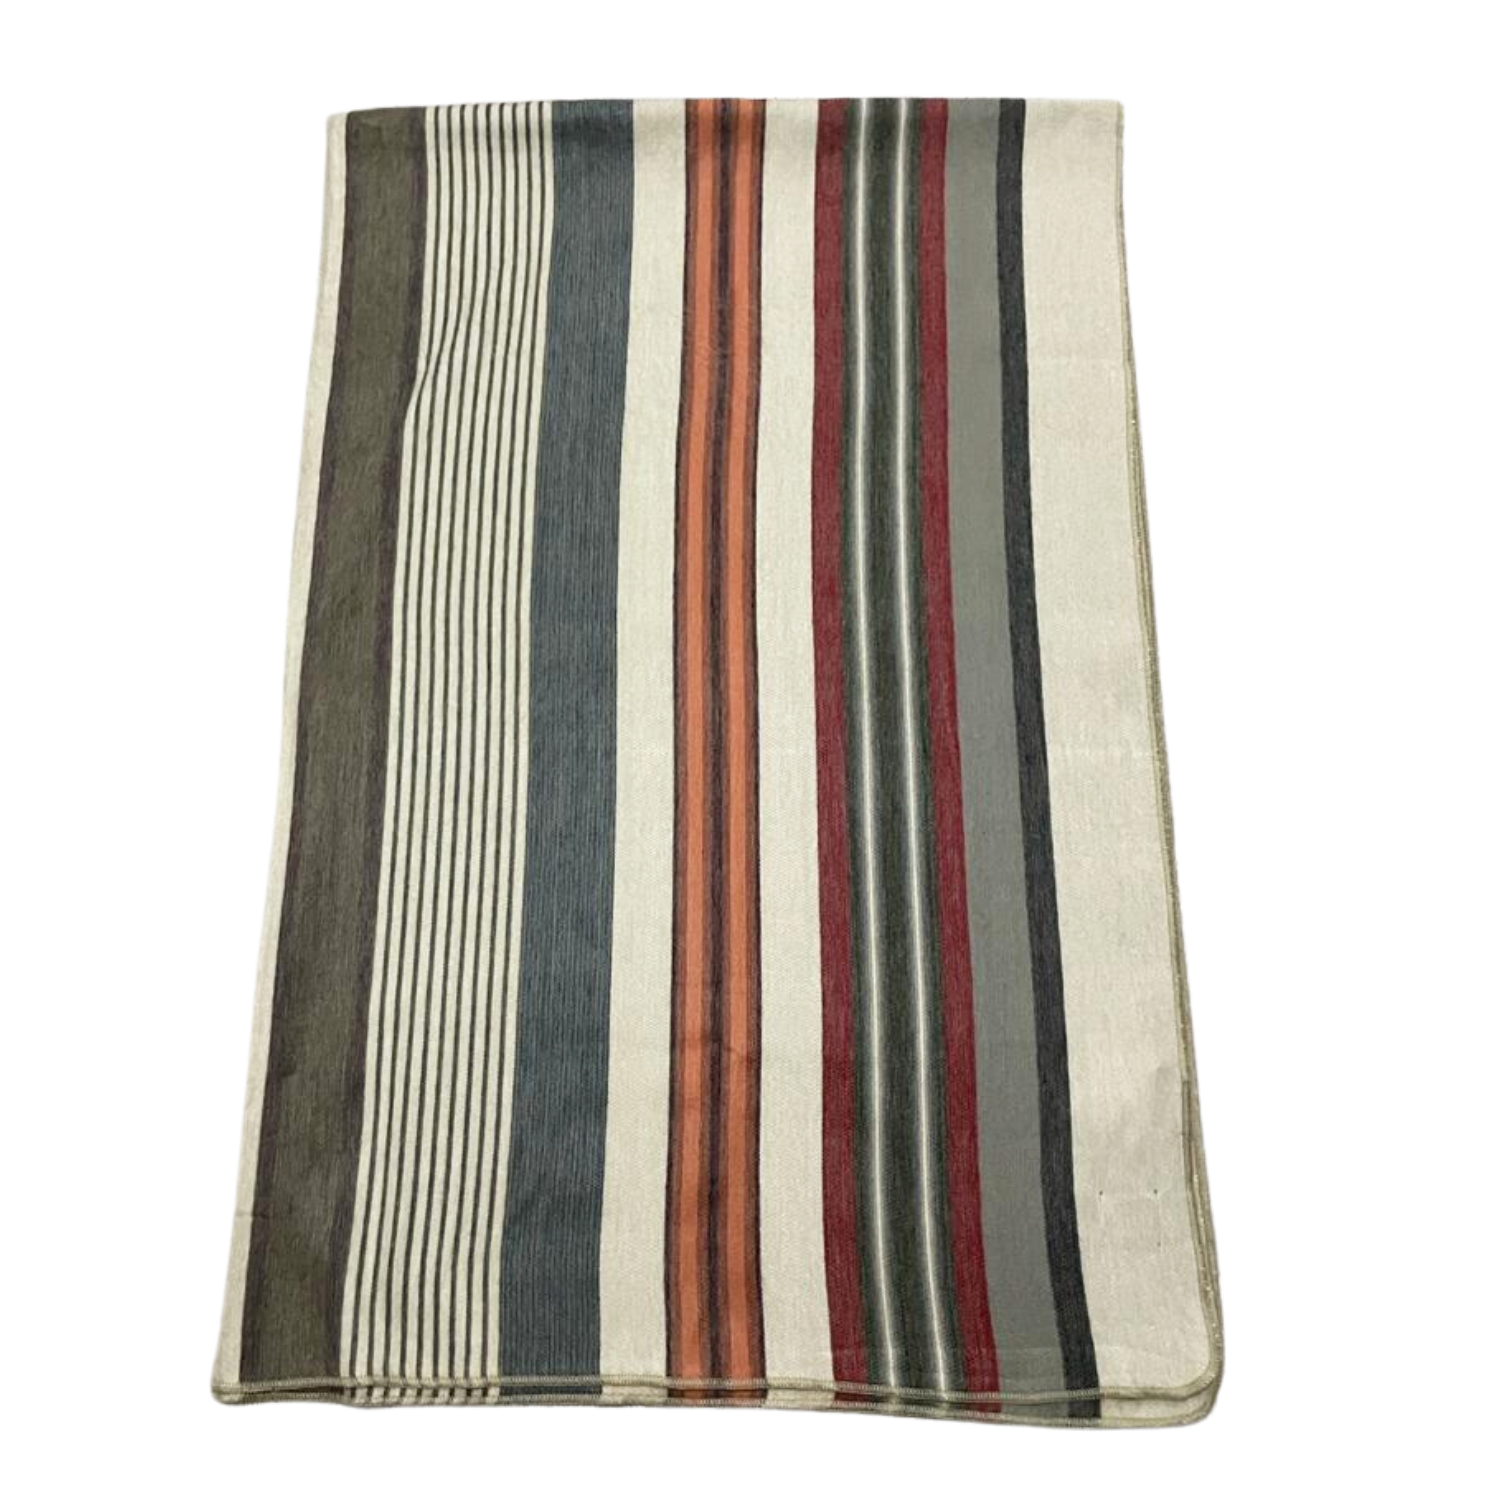 Cozy Luxurious Striped Alpaca Wool Blanket Artisan Home Decor